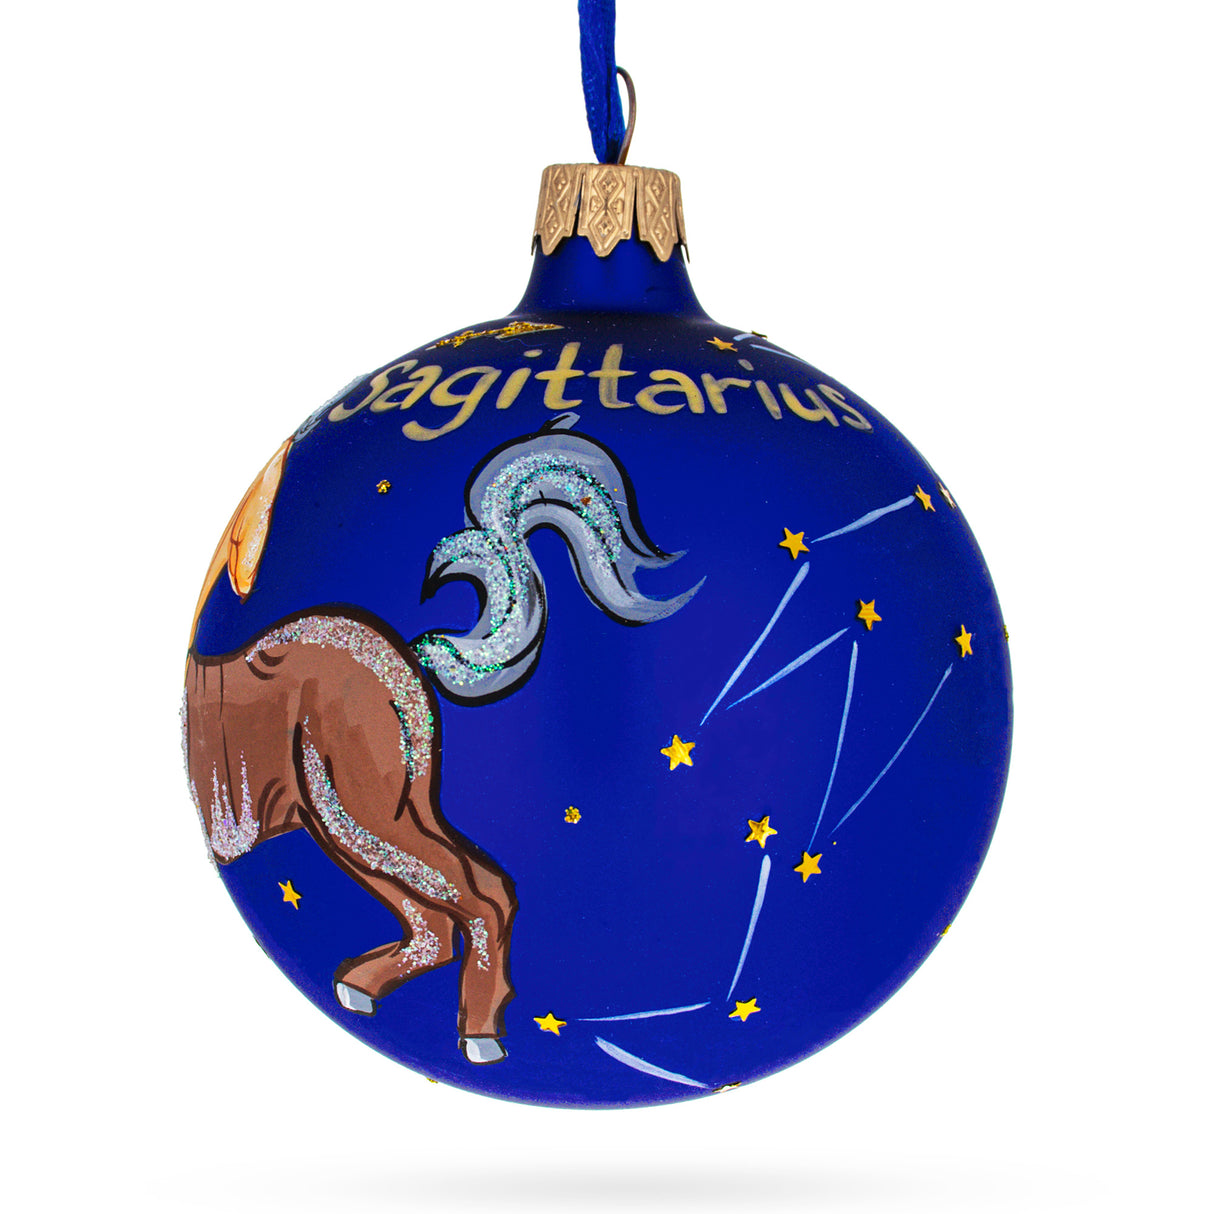 Buy Christmas Ornaments Horoscope by BestPysanky Online Gift Ship